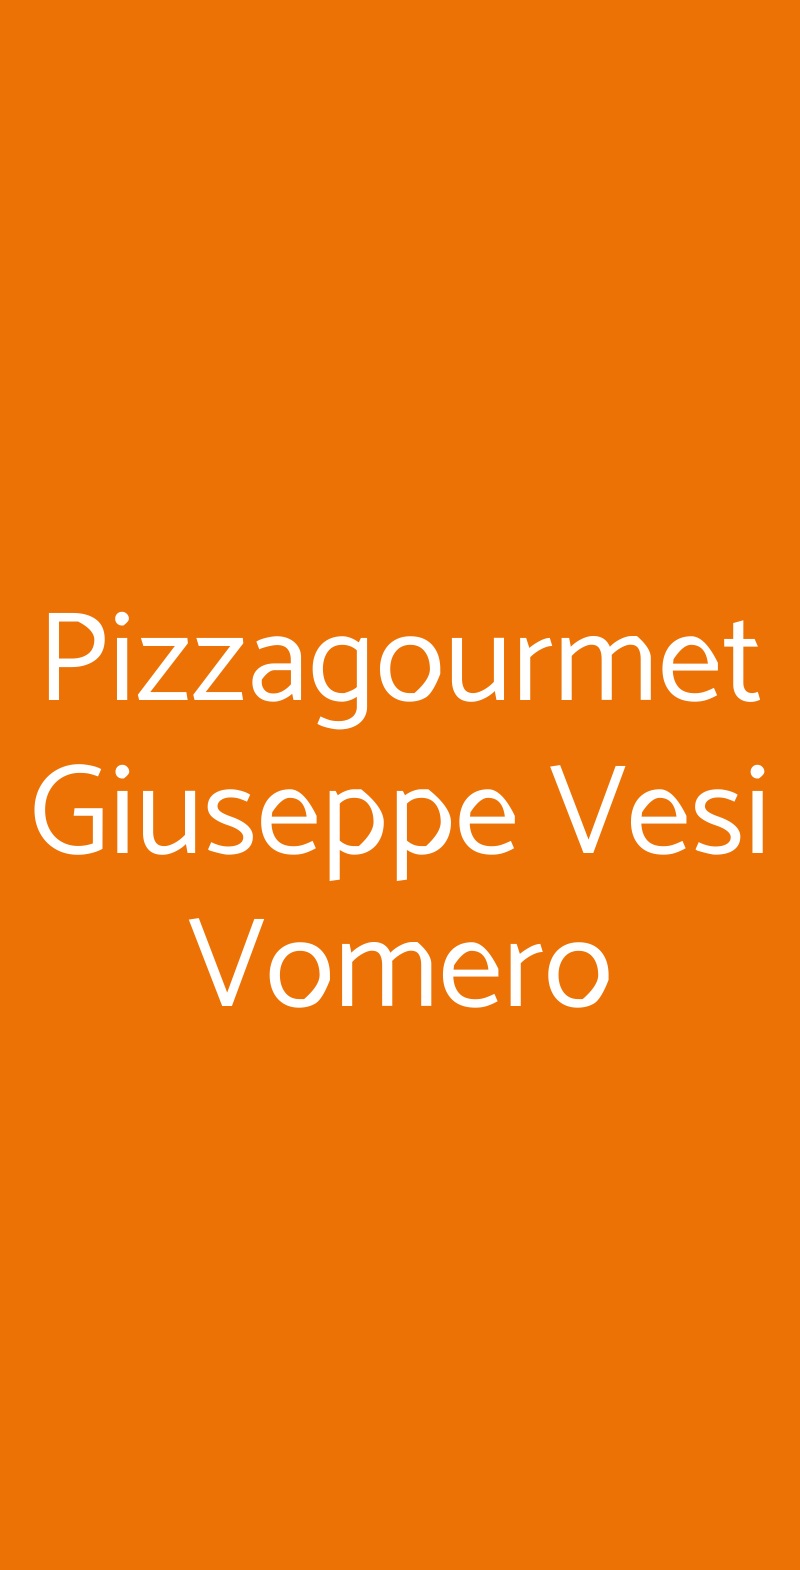 Pizzagourmet Giuseppe Vesi Vomero Napoli menù 1 pagina